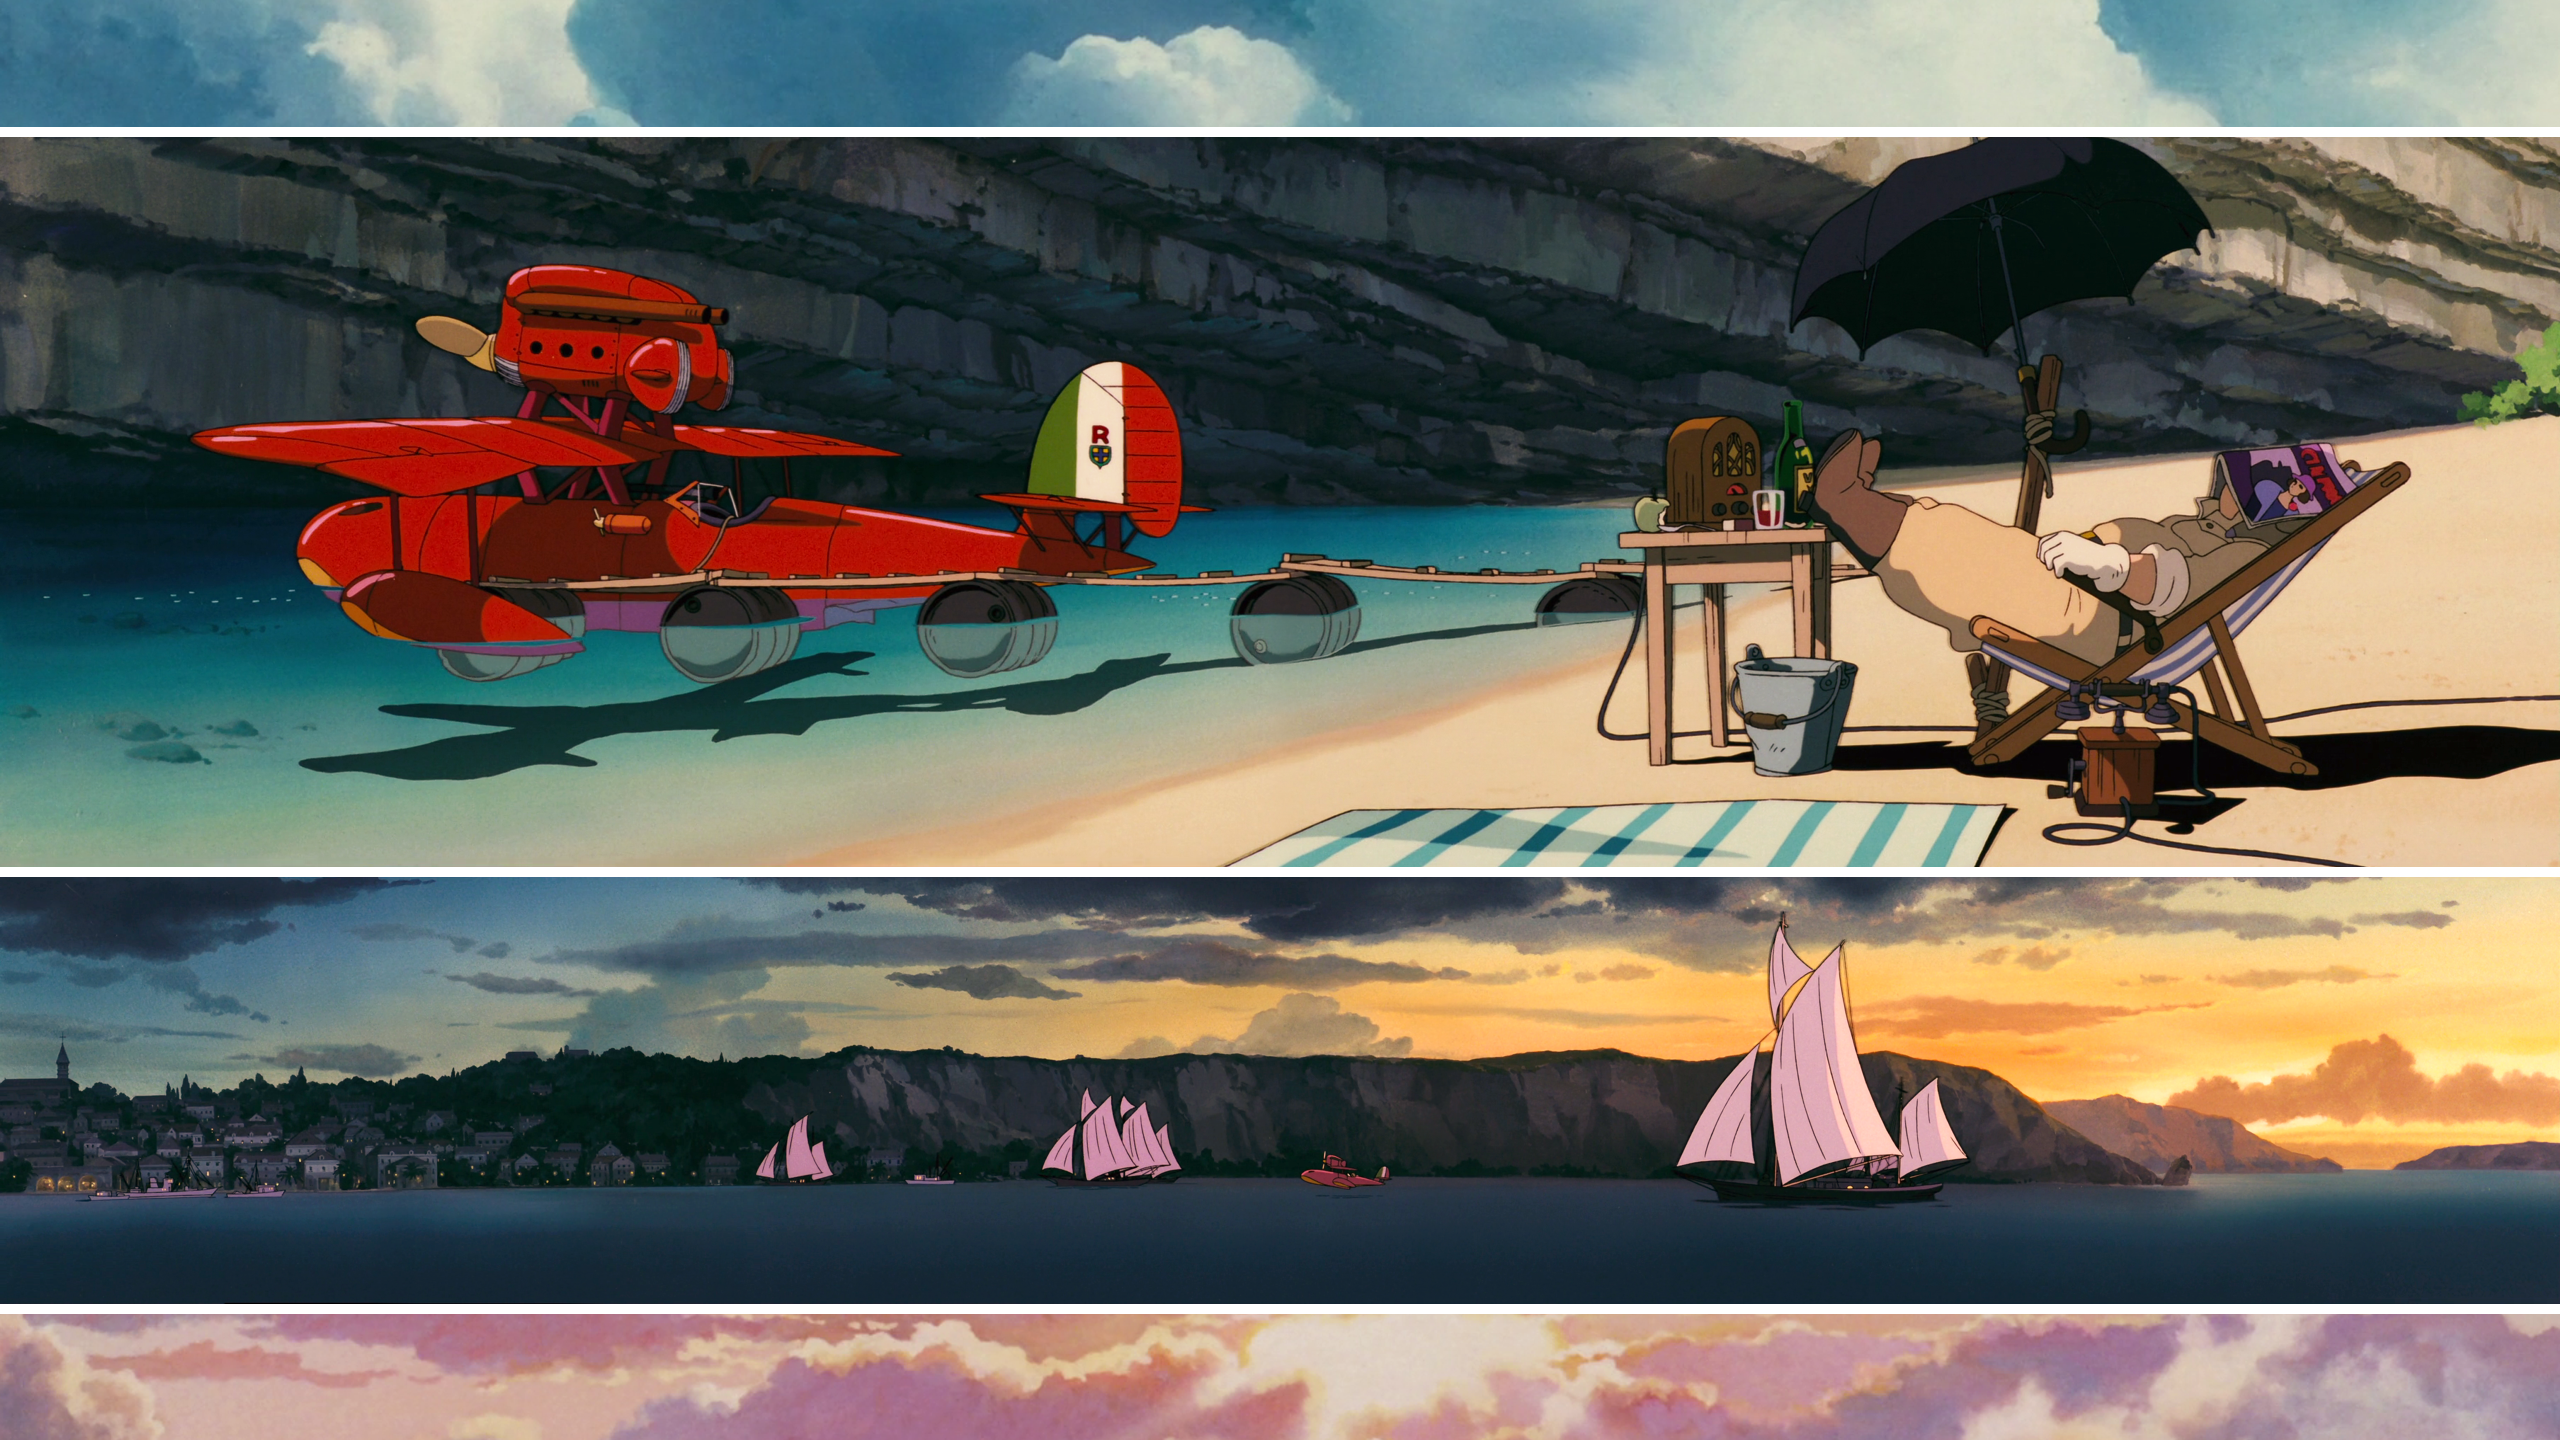 General 2560x1440 anime Kurenai no Buta Porco Rosso digital art collage Studio Ghibli film stills